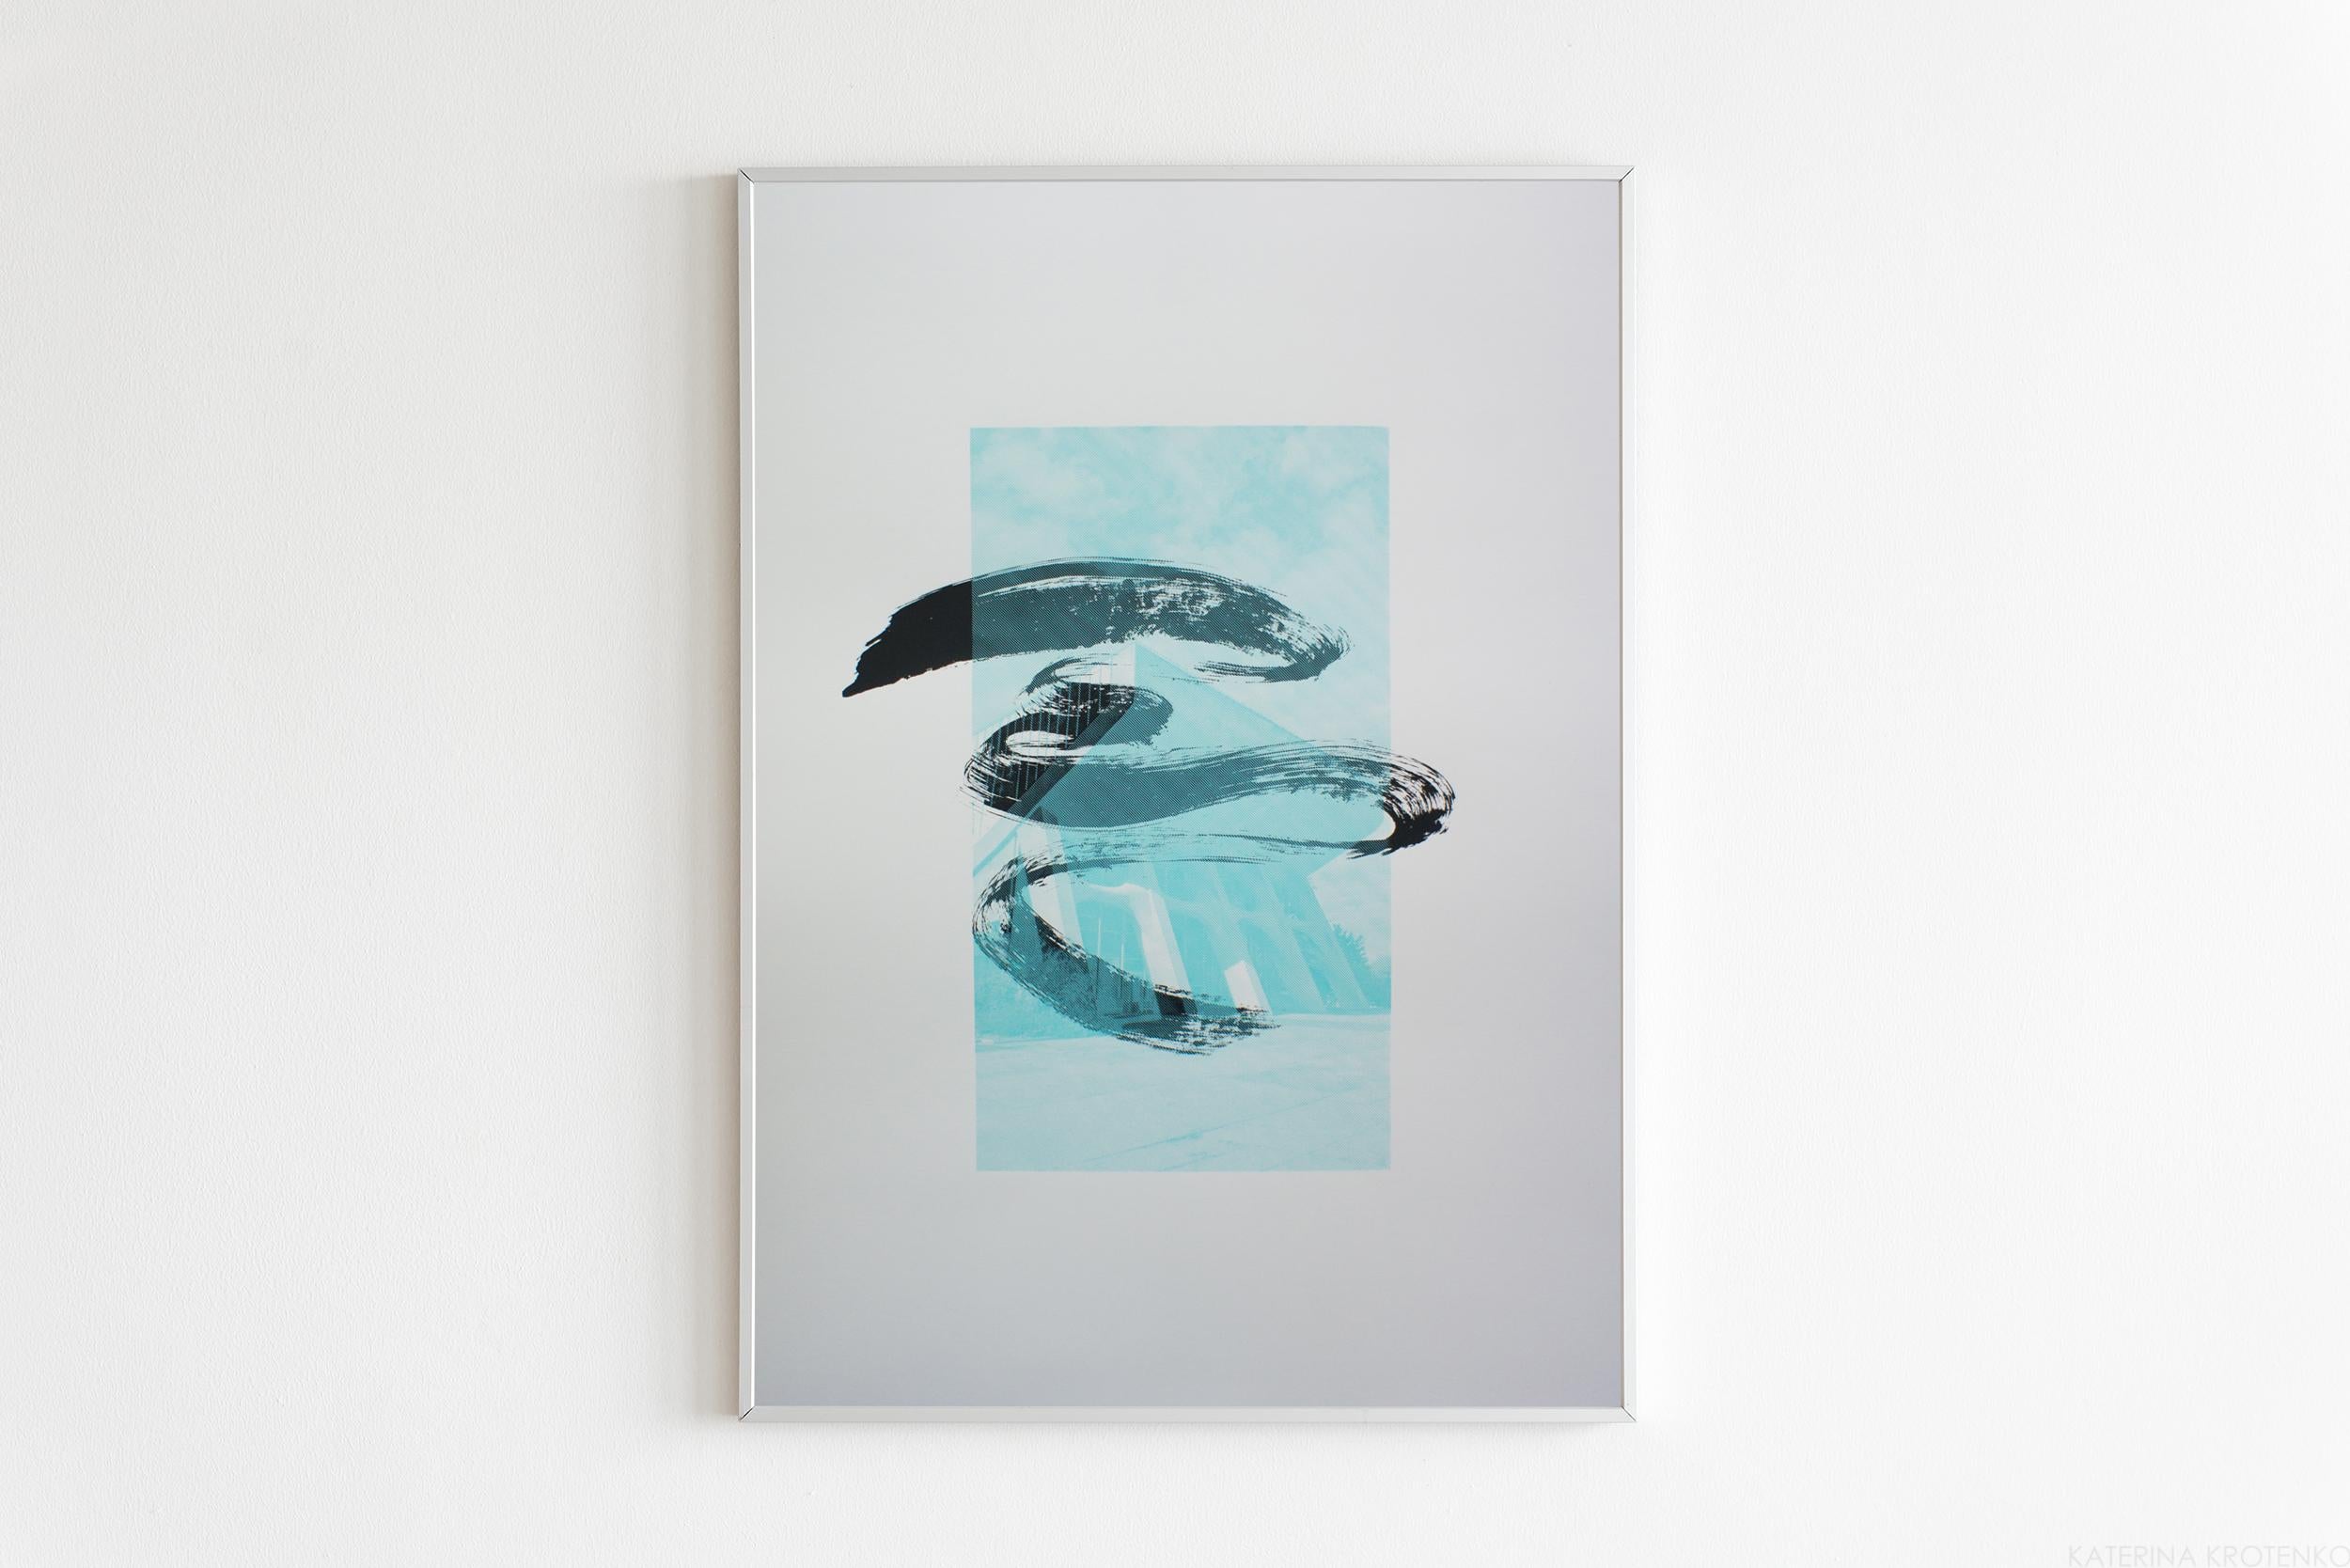 Katerina Krotenko Abstract Print - Invisible treasures # 2 architectural serigraphy